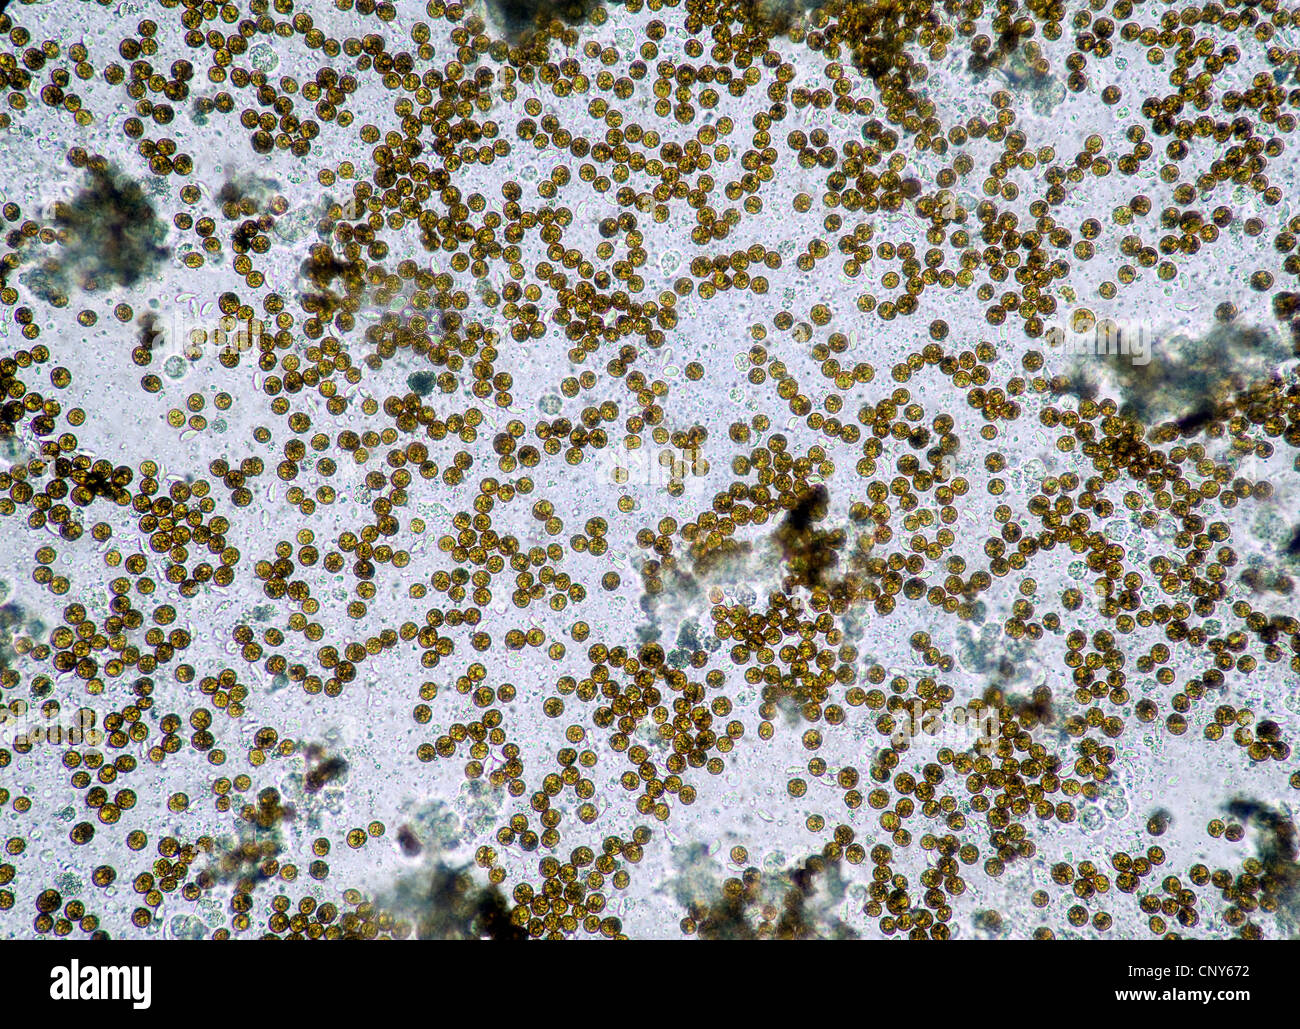 Microscopic photo of symbiotic algae (Zooxanthellae) of the Stock Photo ...